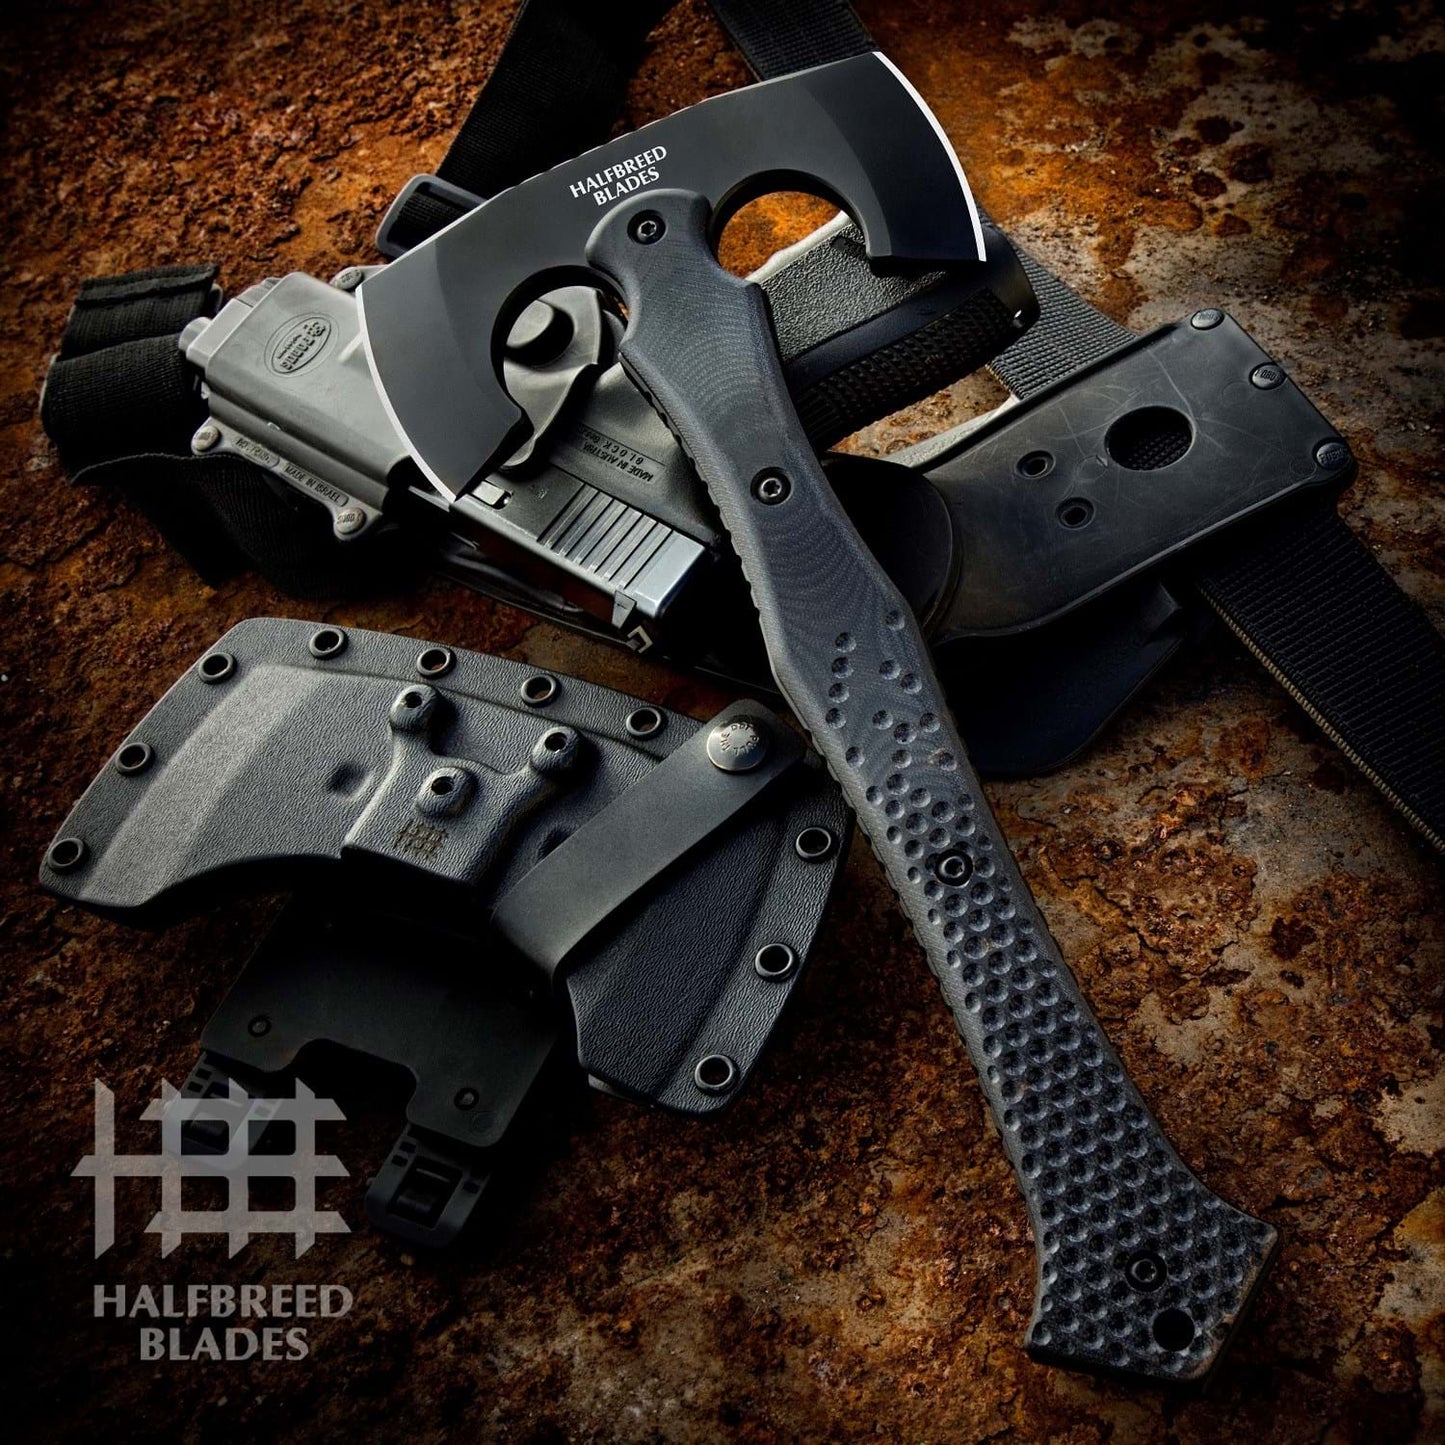 Halfbreed Blades CBA-01 Black Compact Battle Axe